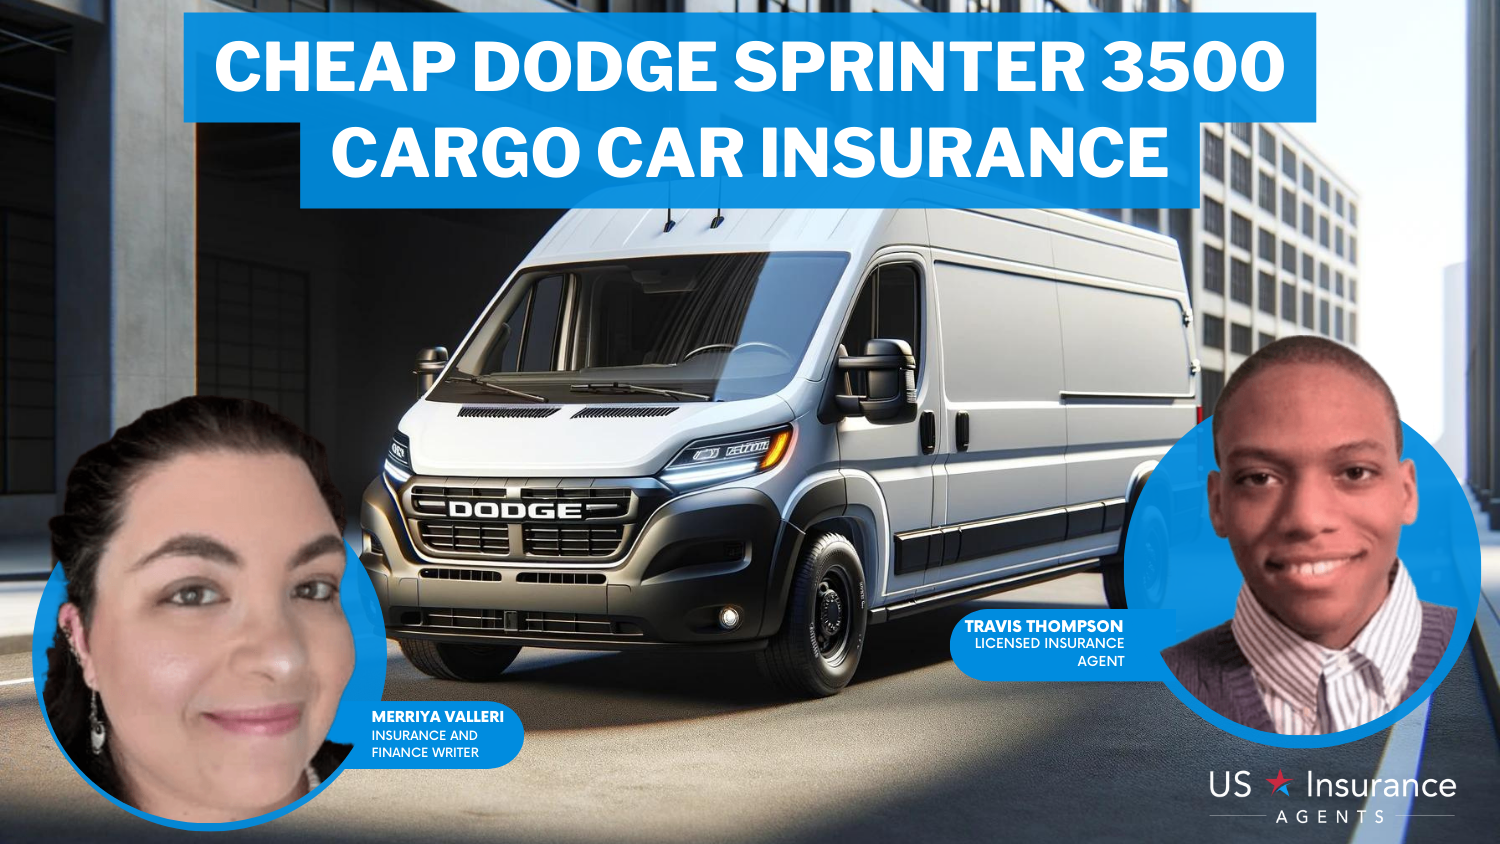 Cheap Dodge Sprinter 3500 Cargo Car Insurance: Progressive, Travelers, and Farmers